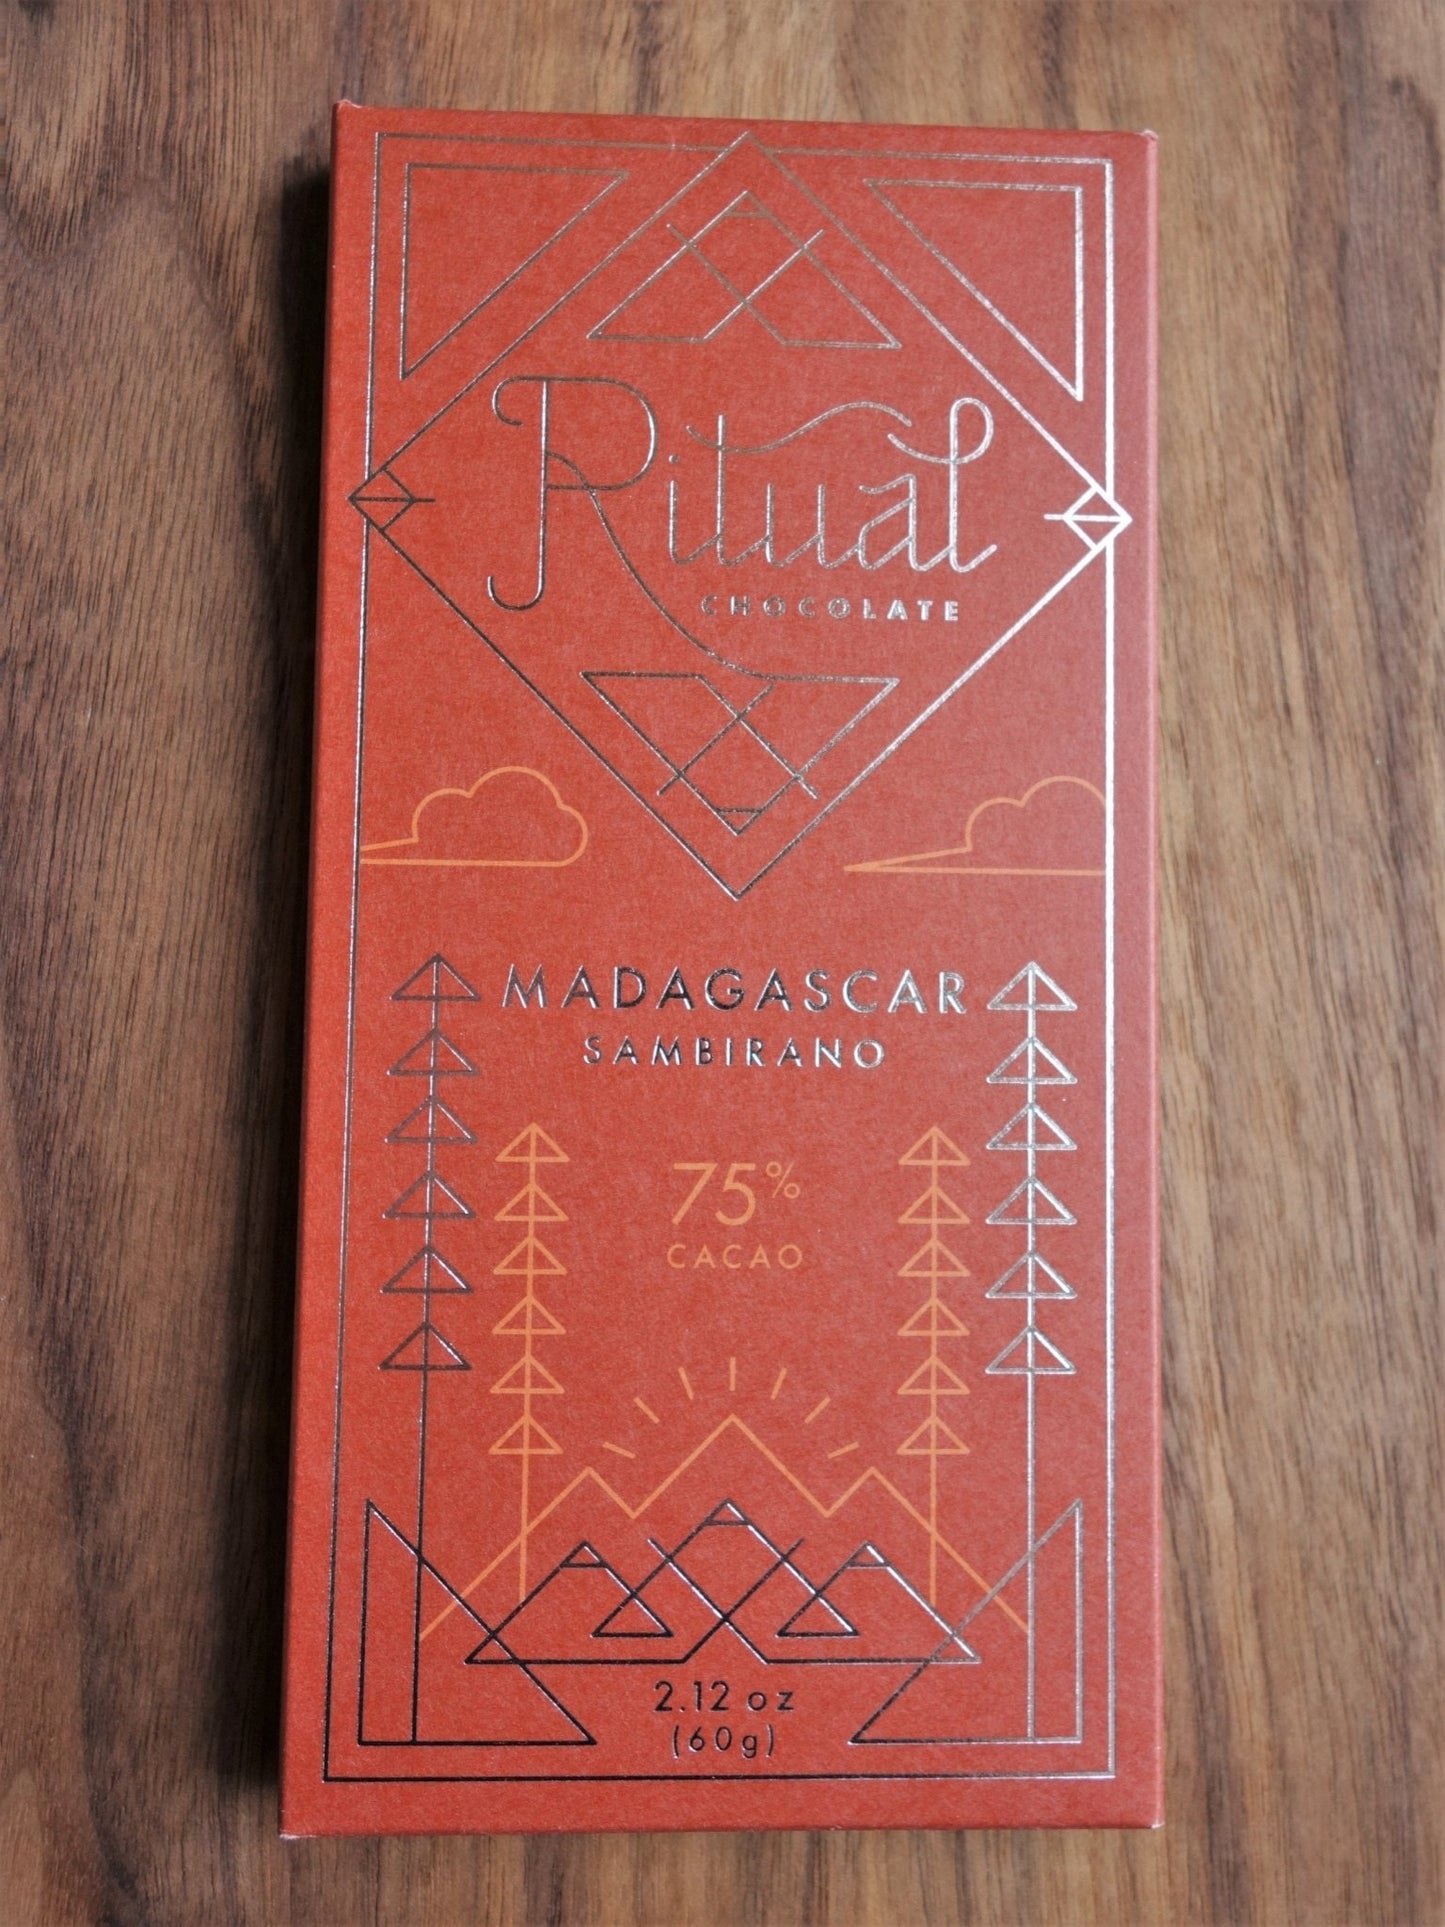 Ritual Madagascar 75pct - Mongers' Provisions